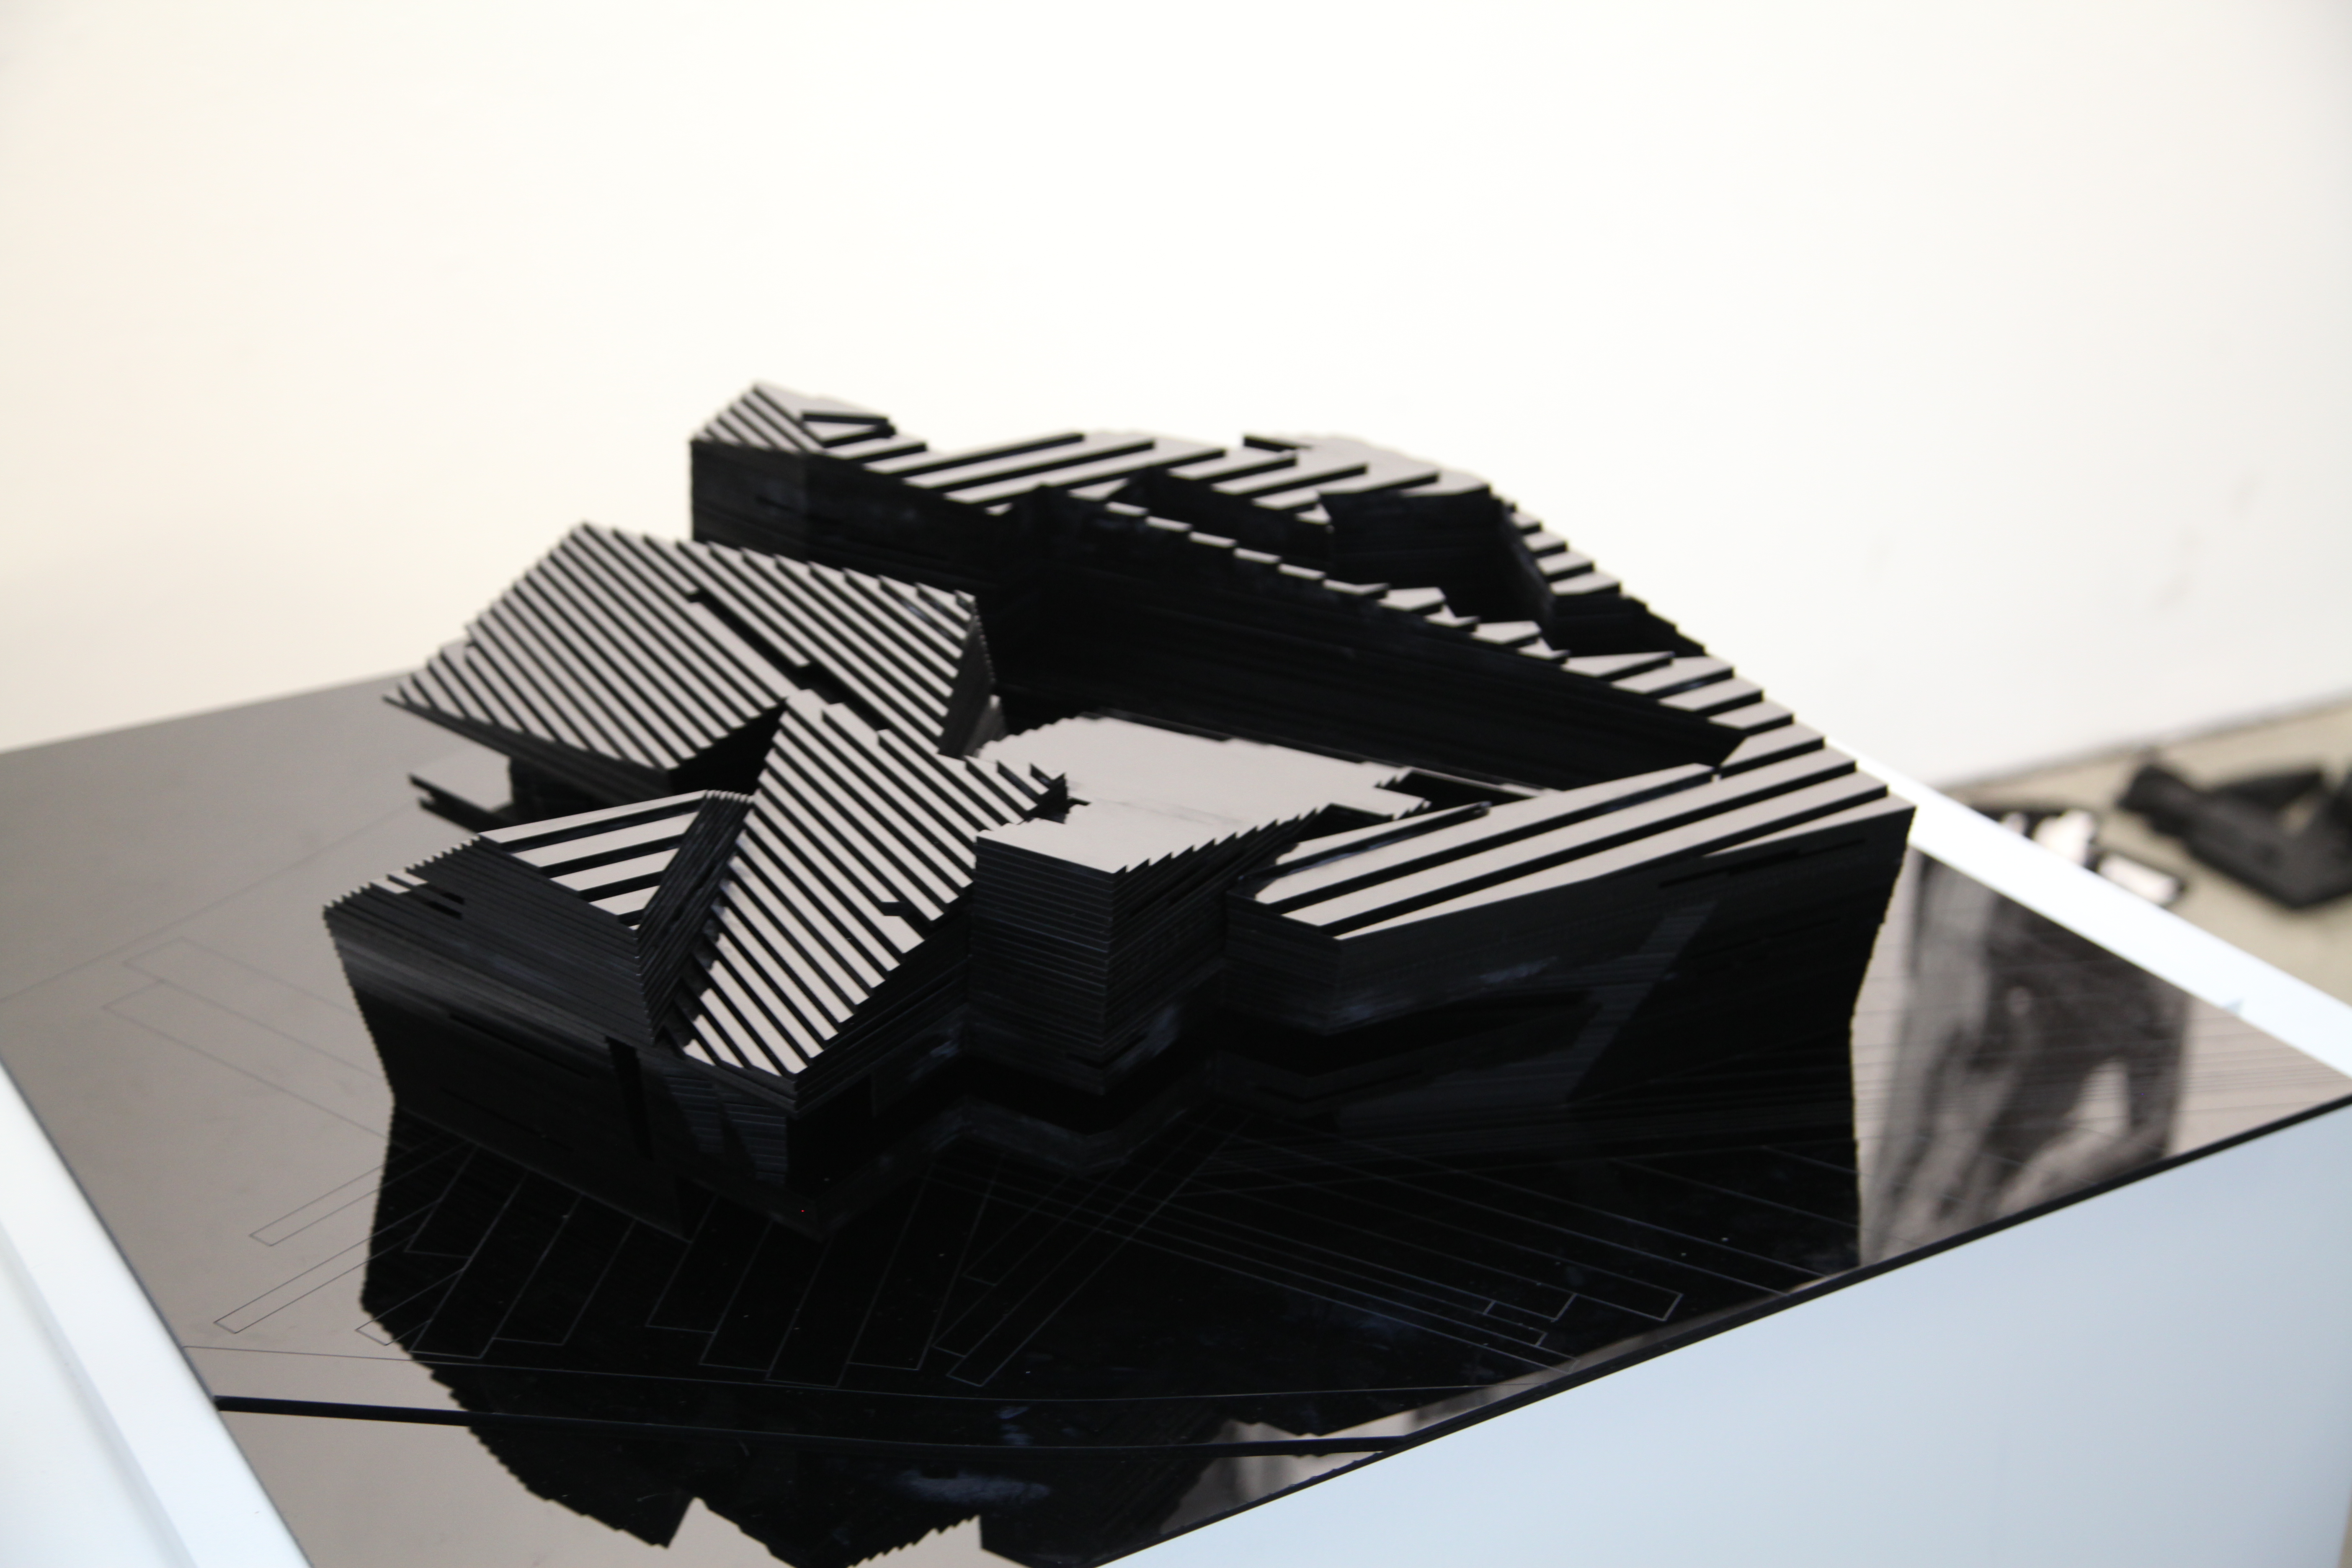 A black architectural model